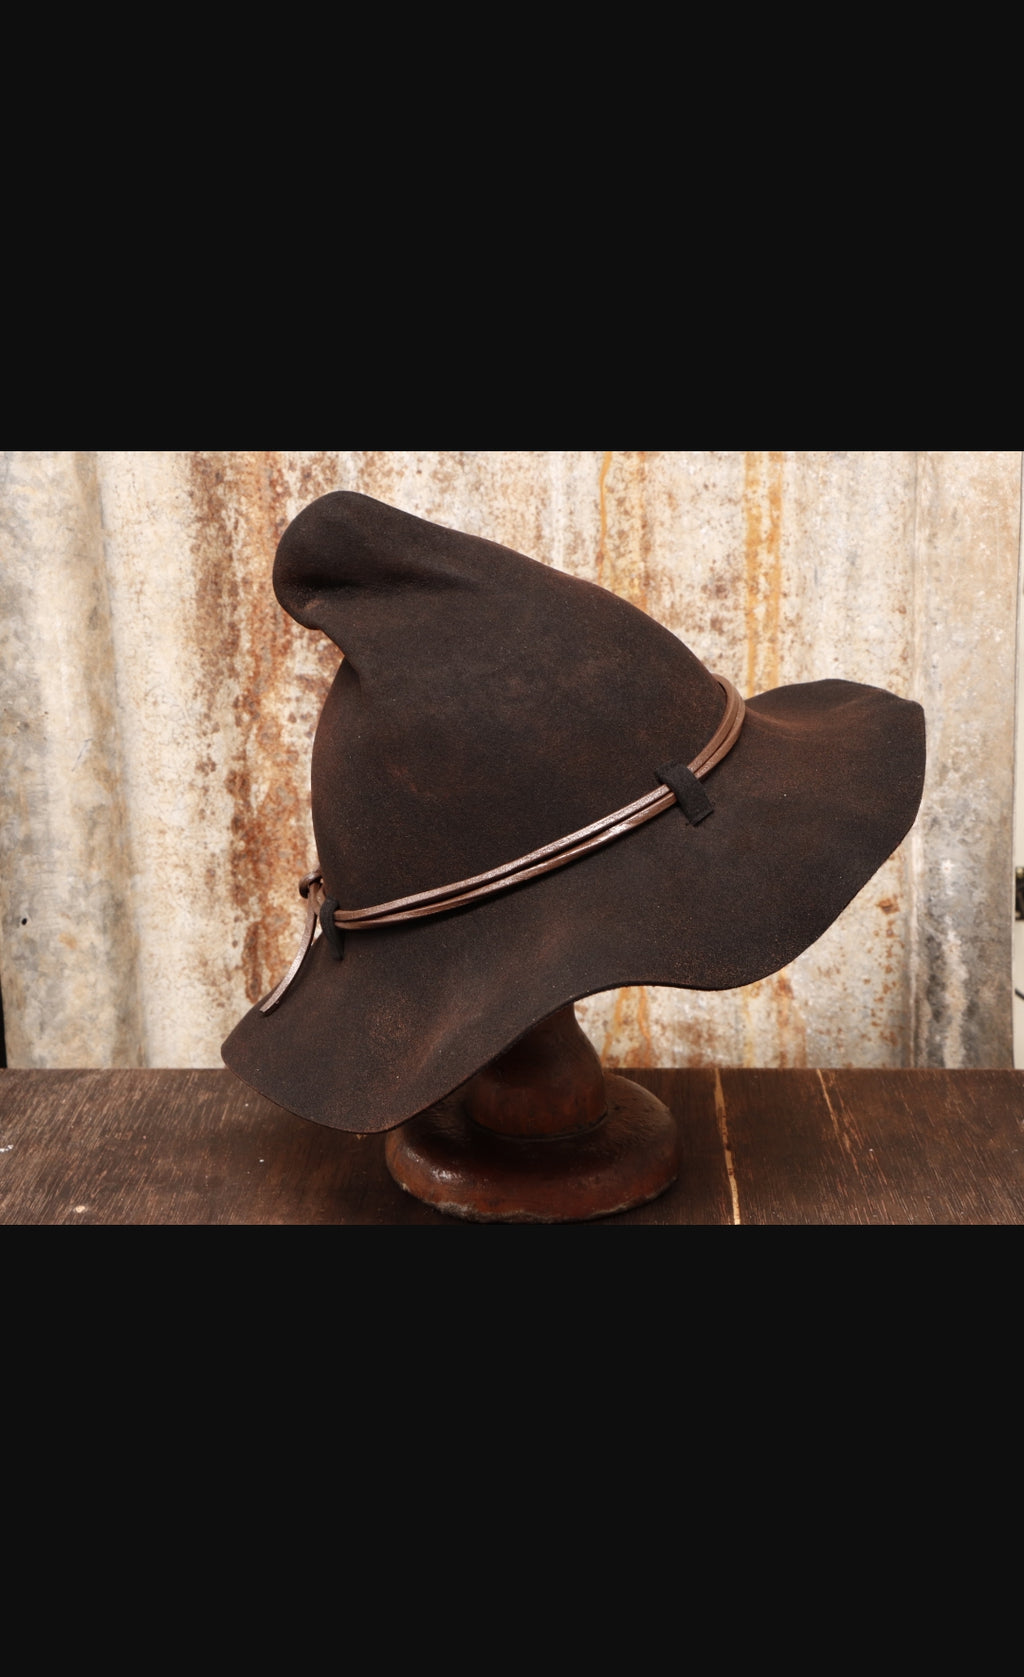 Aged BlackGnome Hat